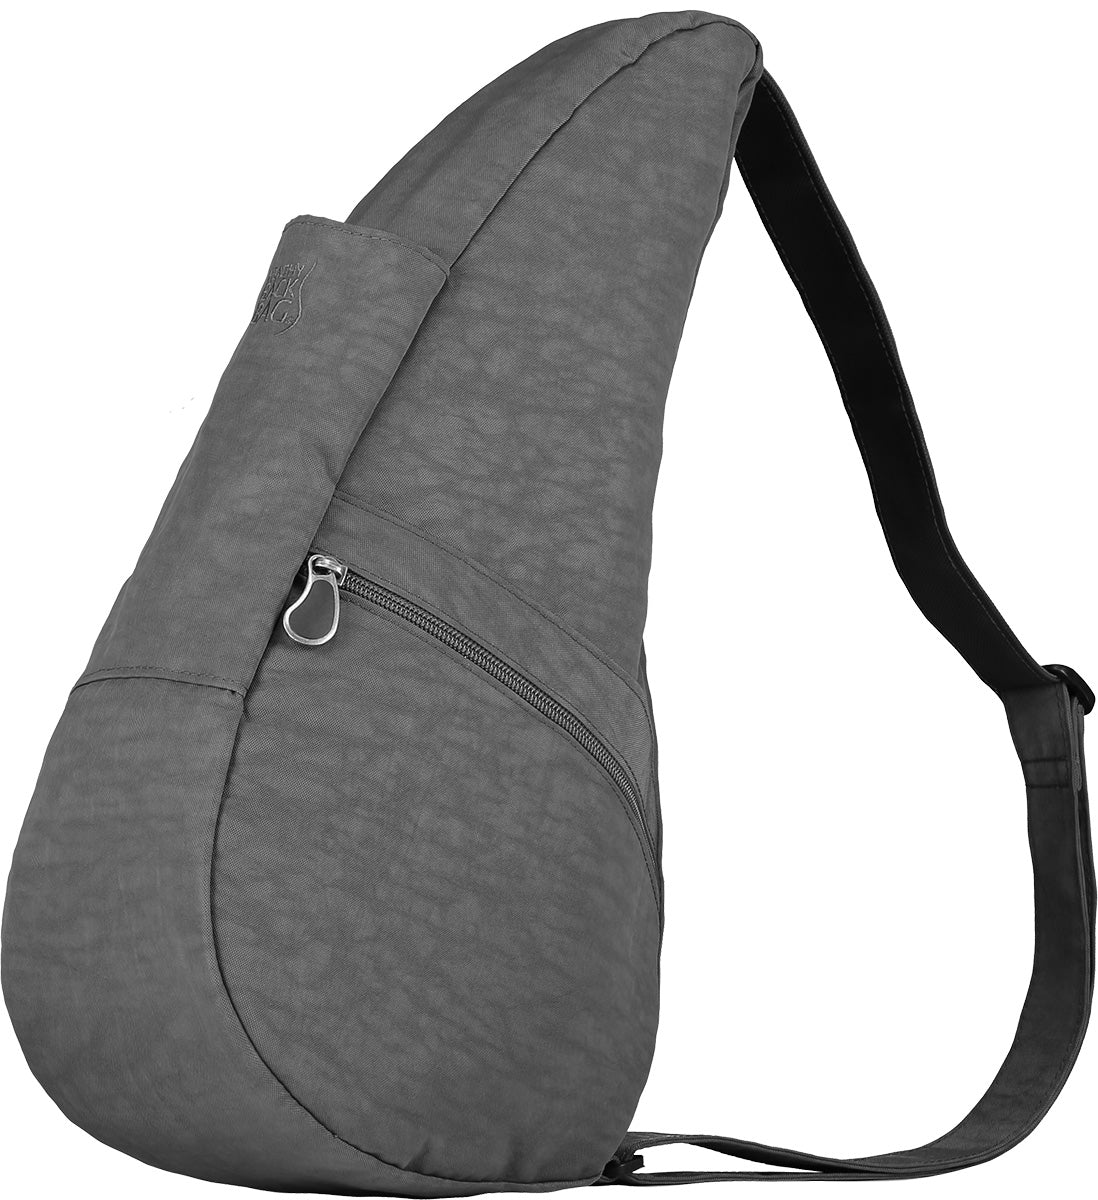 AmeriBag Healthy Back Bag tote Distressed Nylon Small (Stormy Grey)